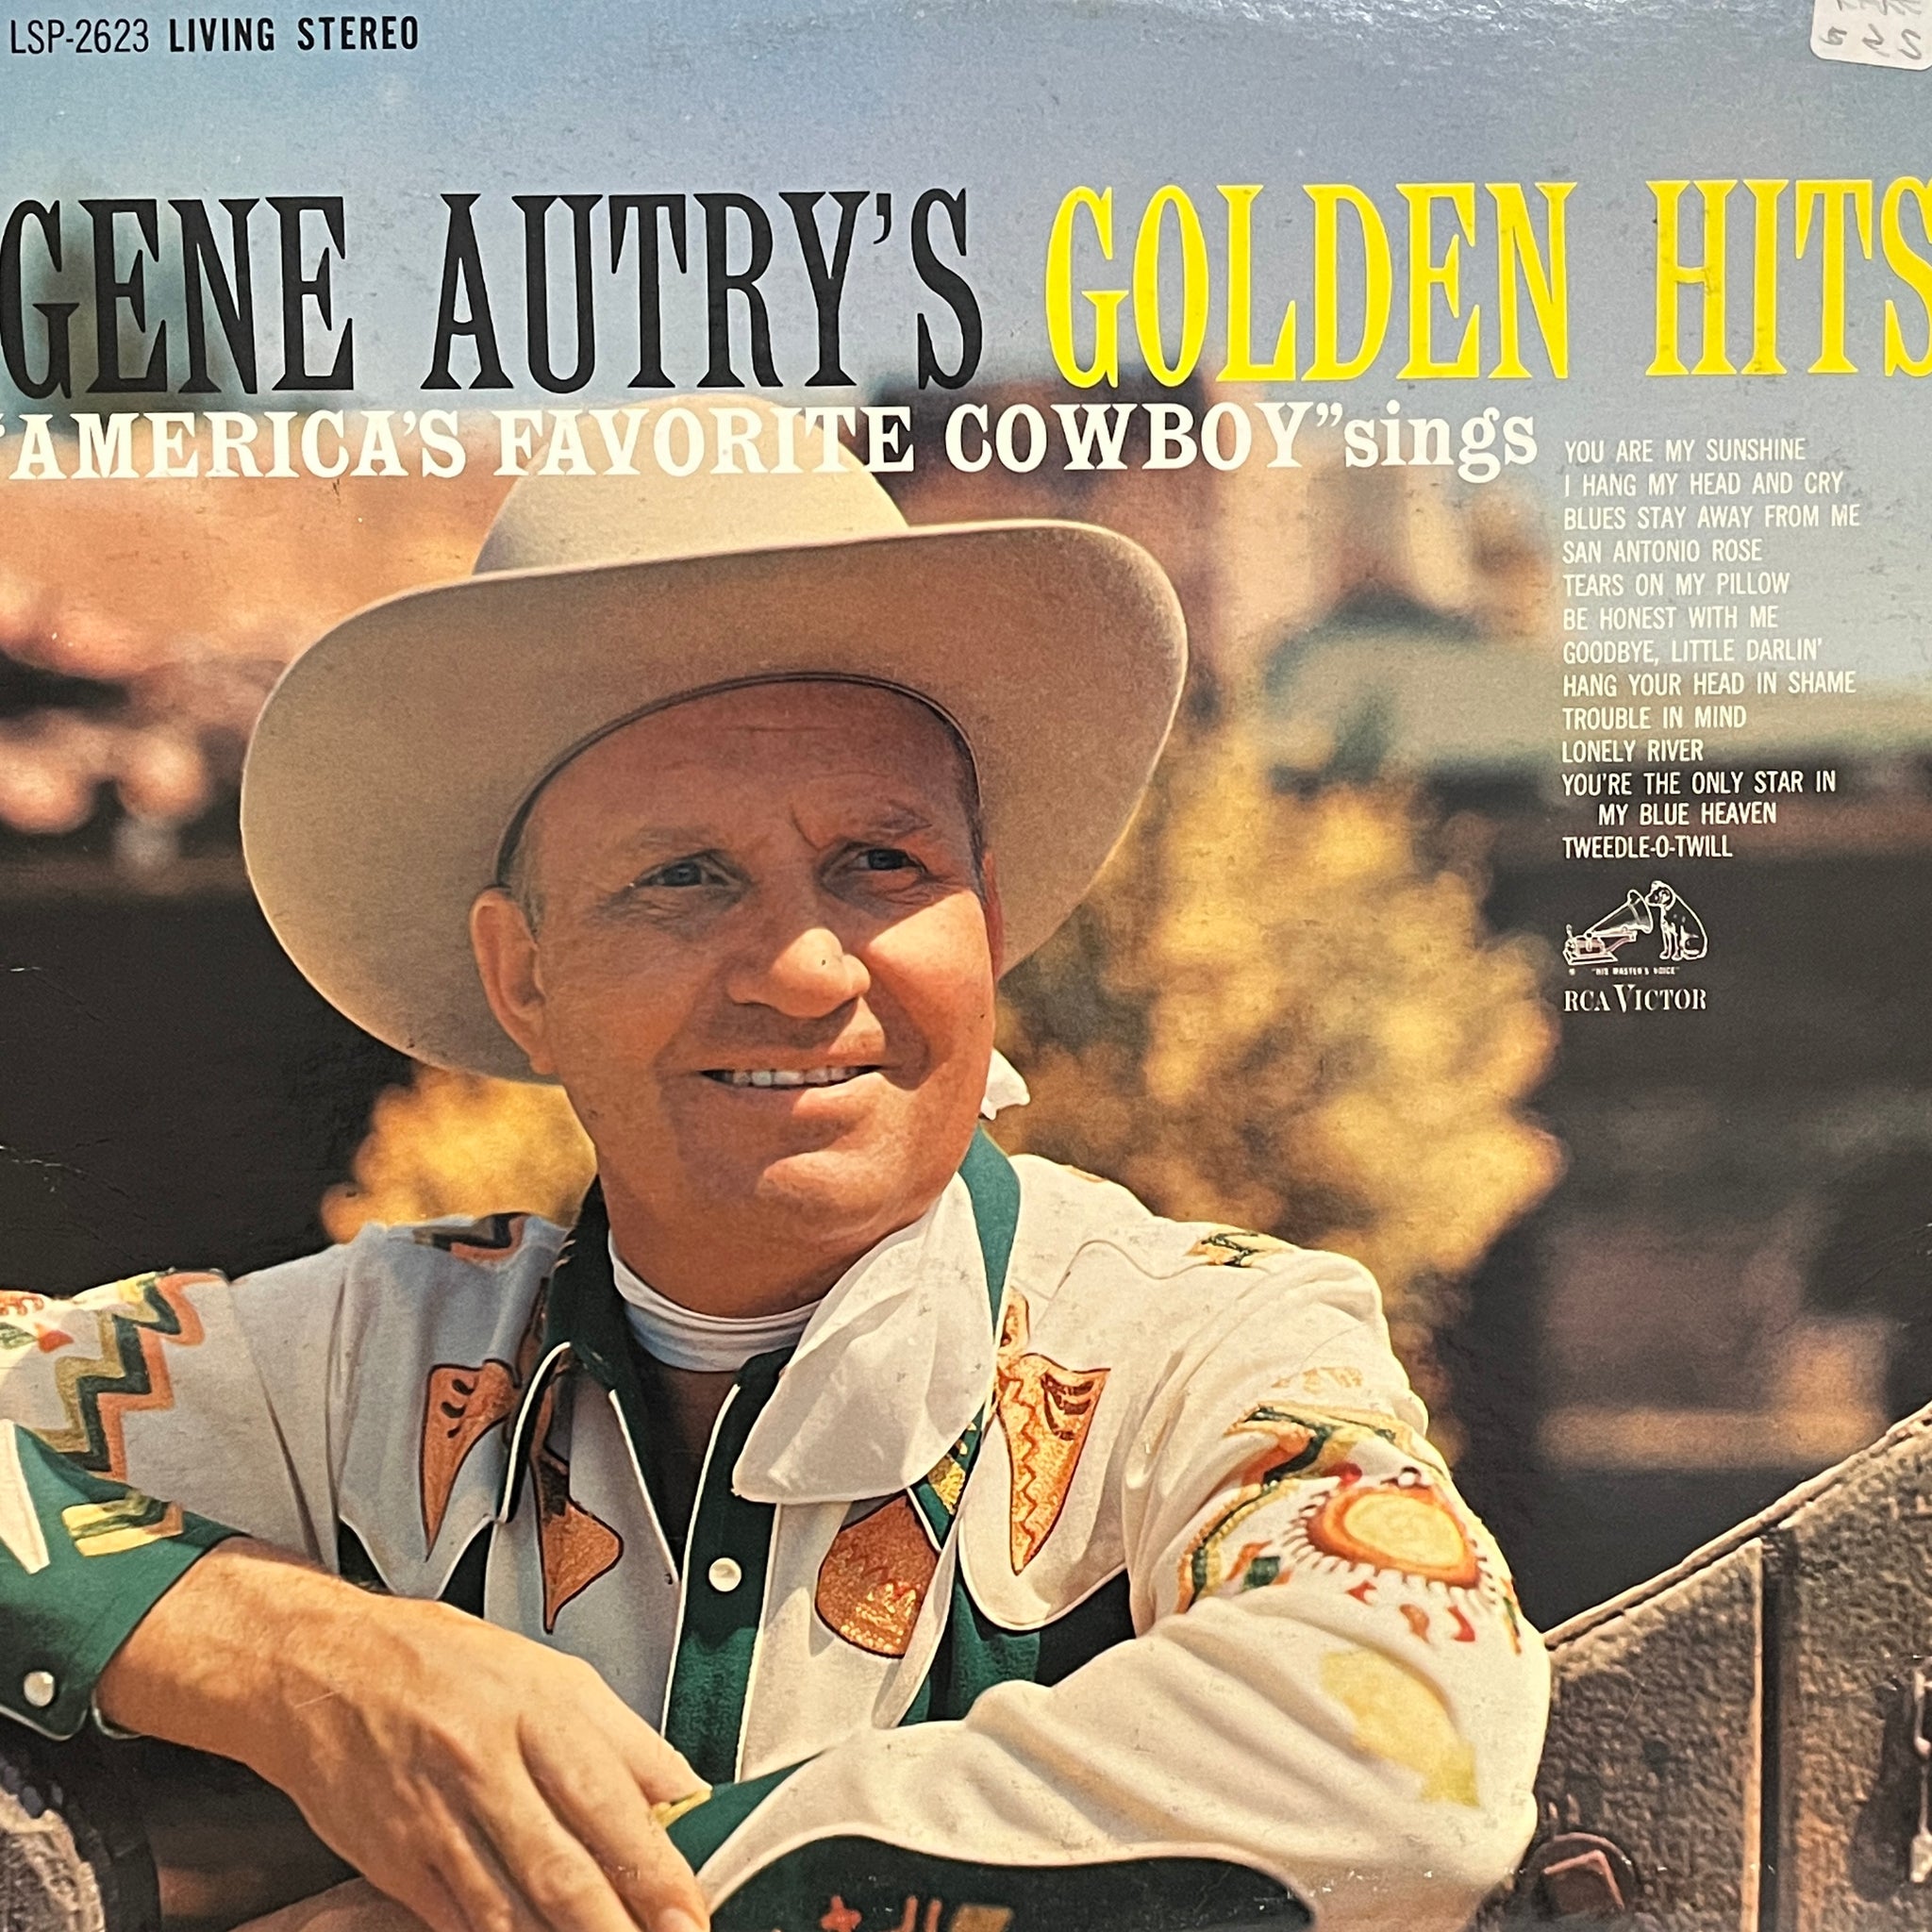 Gene Autry – Gene Autry's Golden Hits (America's Favorite Cowboy Sings His Golden Hits)